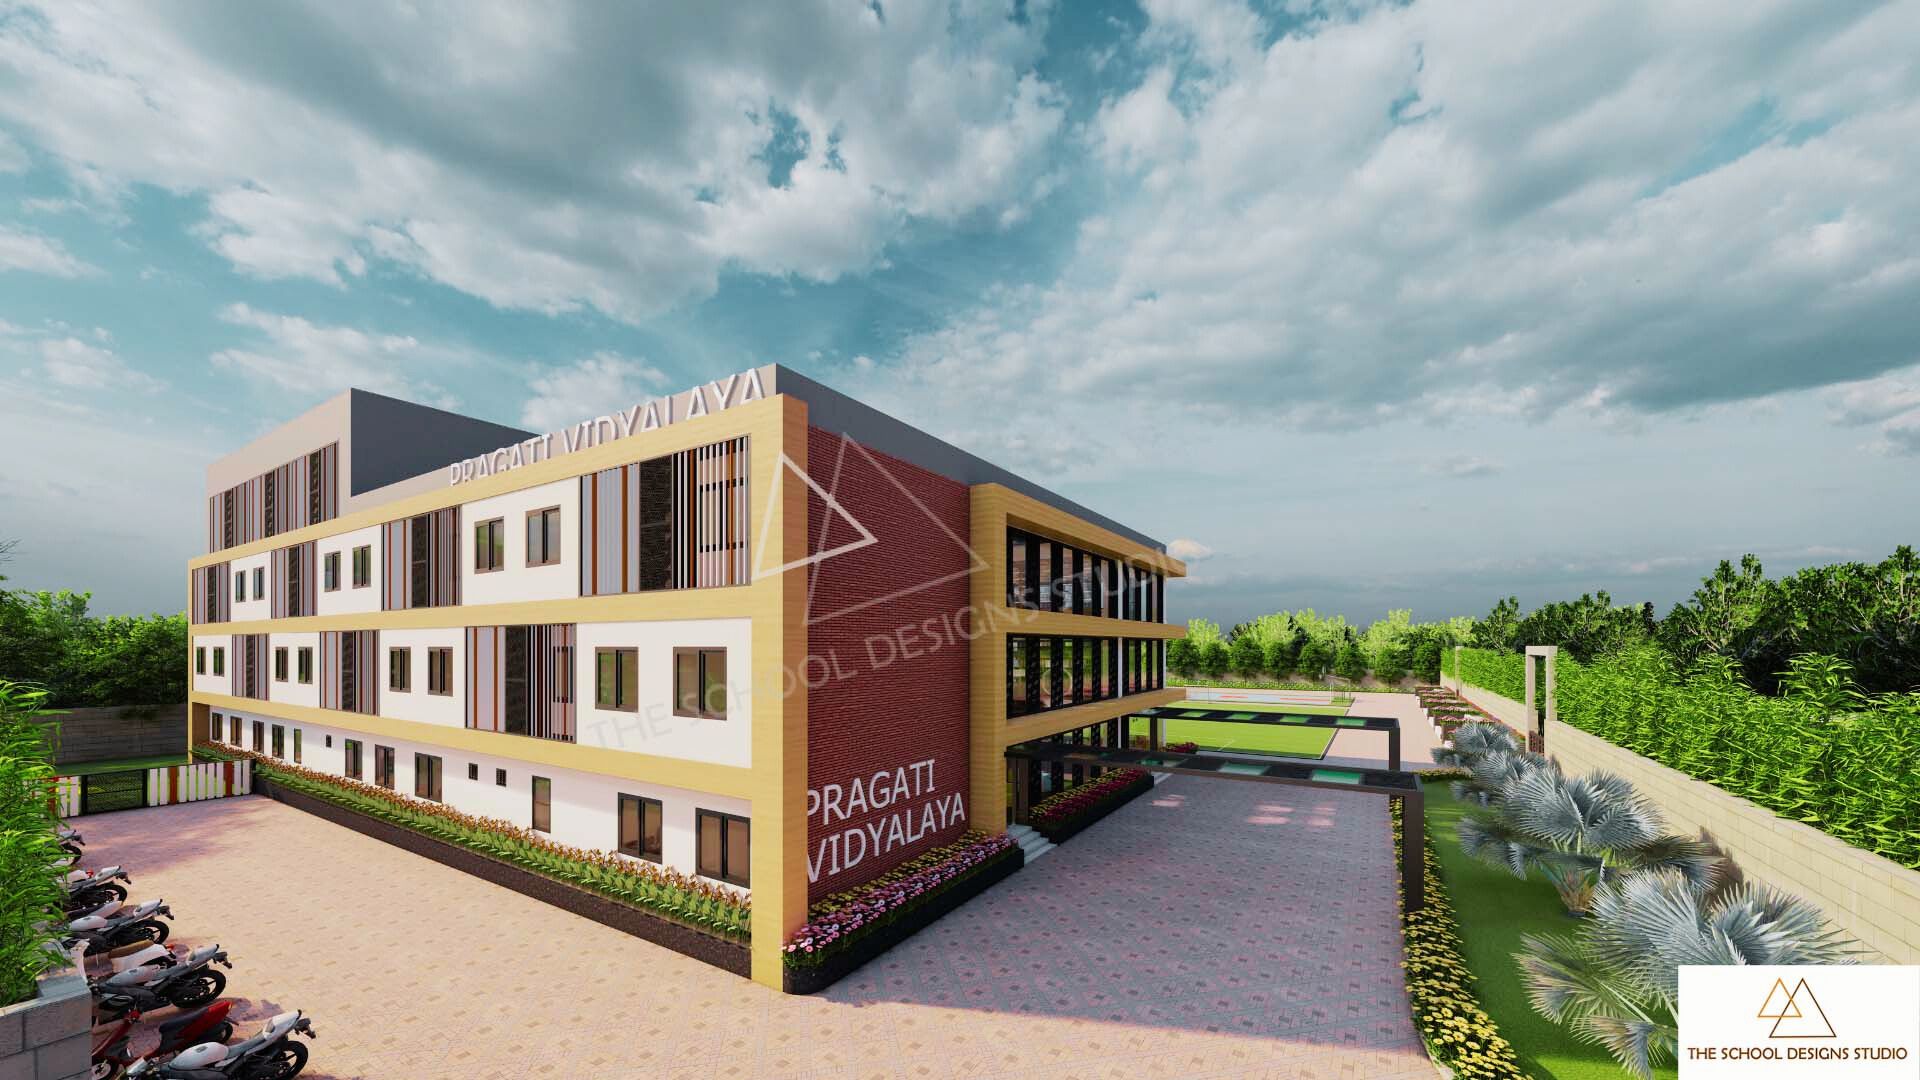 Pragati Vidyalaya, Challakere, Karnataka. Designed By The School Designs Studio (Top School Architects in India) - School building elevation from Parking Area